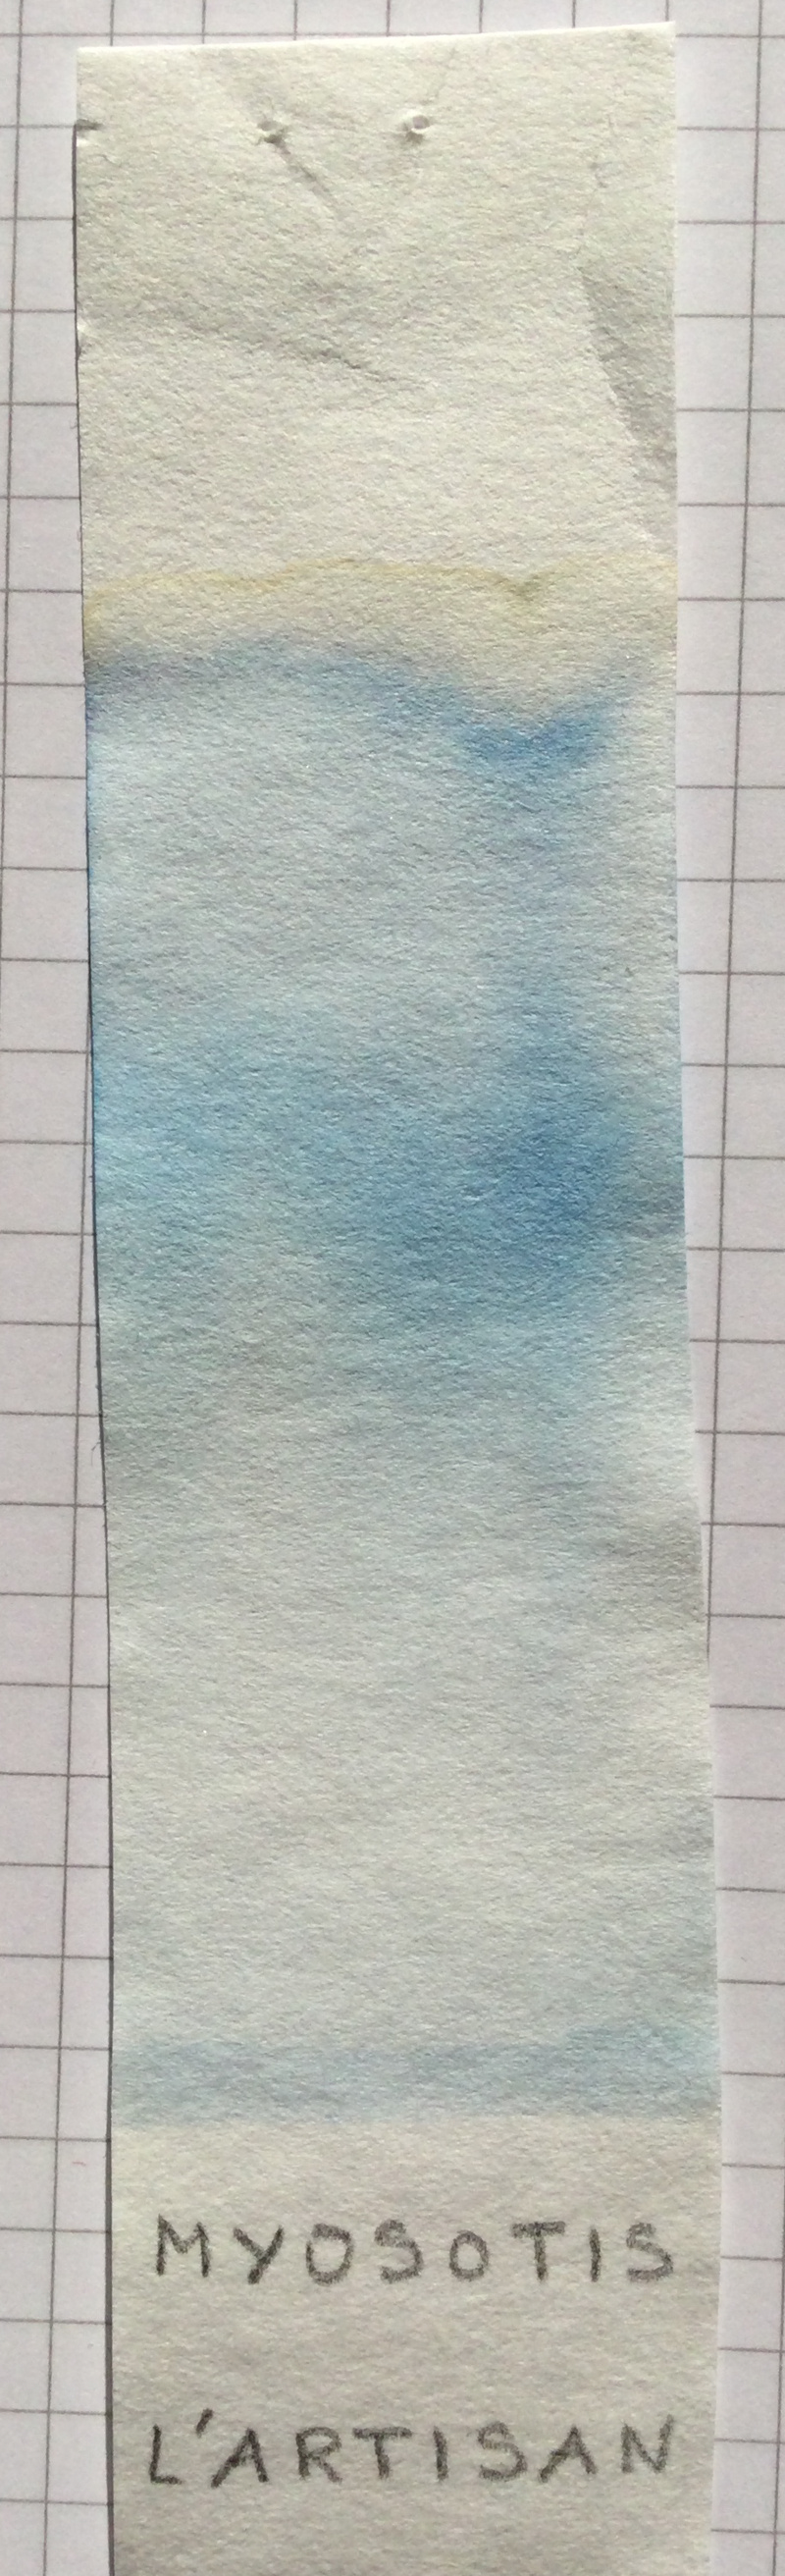 L-Artisan-Pastellier-Bleu-Myosotis-Chromatographie-Wasser.jpg